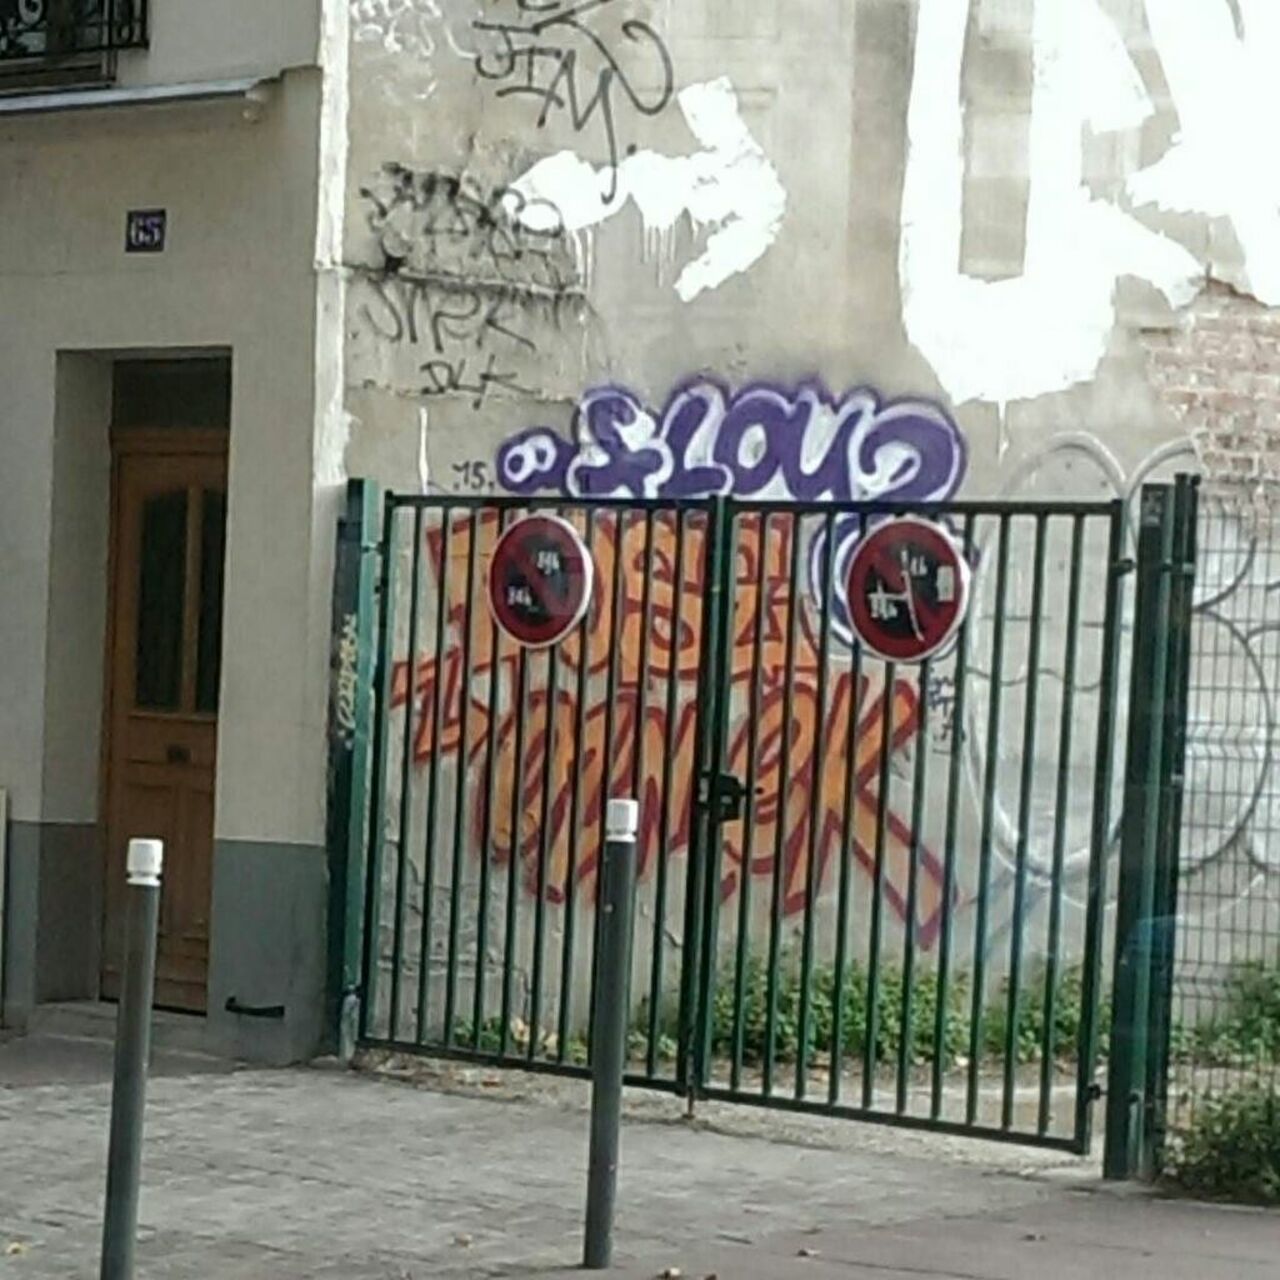 #streetart #streetarteverywhere #streetshot #graffitiart #graffiti #arturbain #urbanart  #mur #mural #wall #wallart… https://t.co/TMenHPUZyw